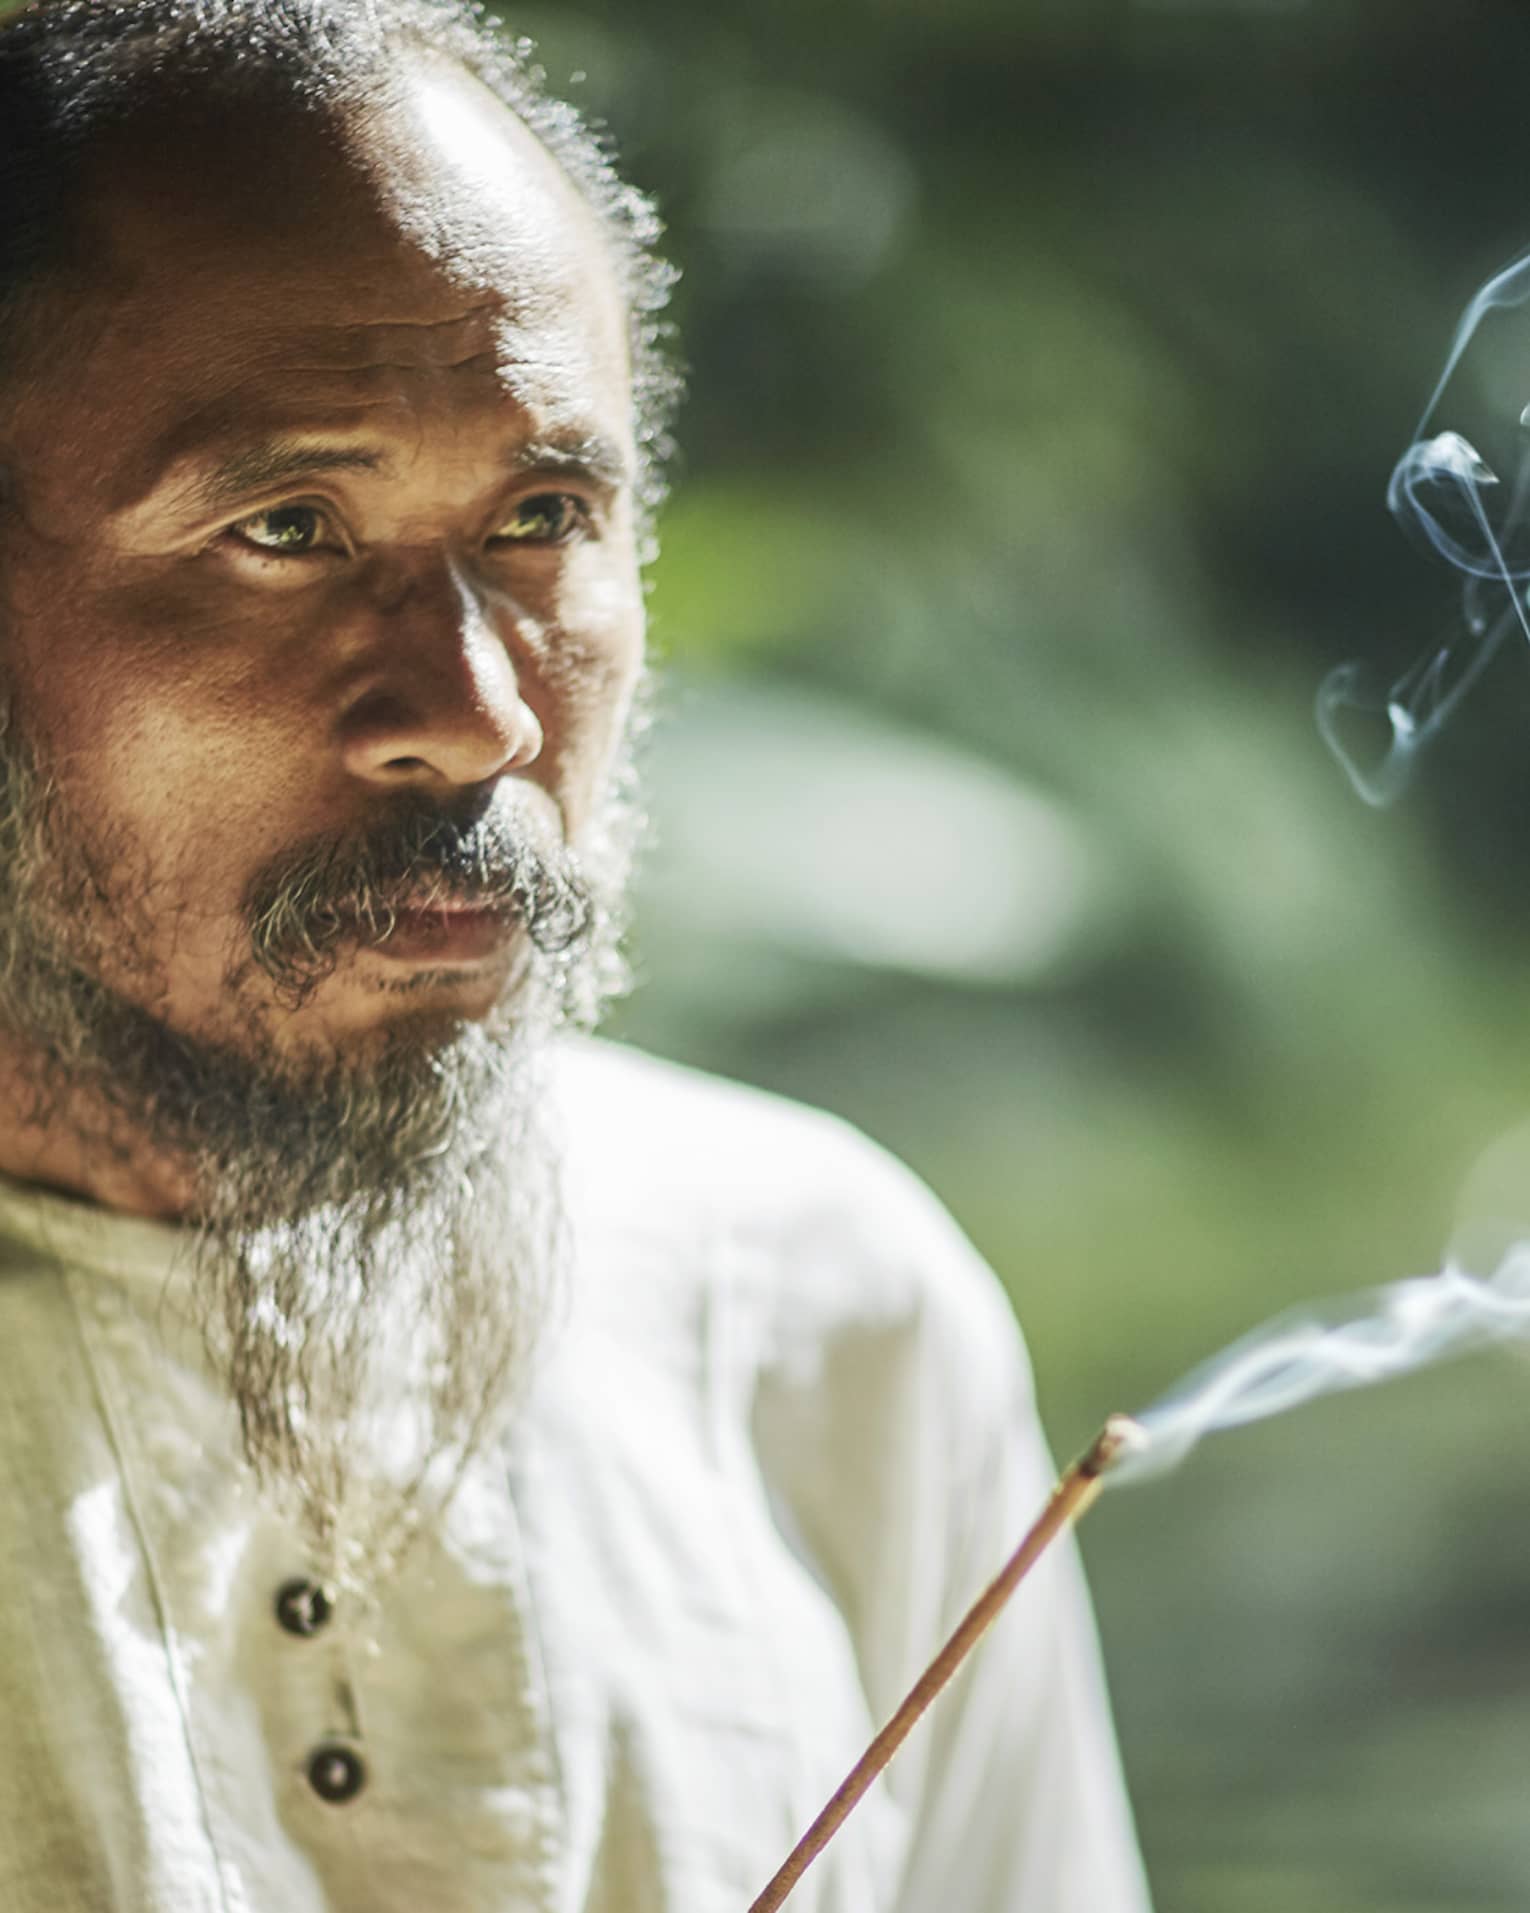 Balinese healer with burning incense